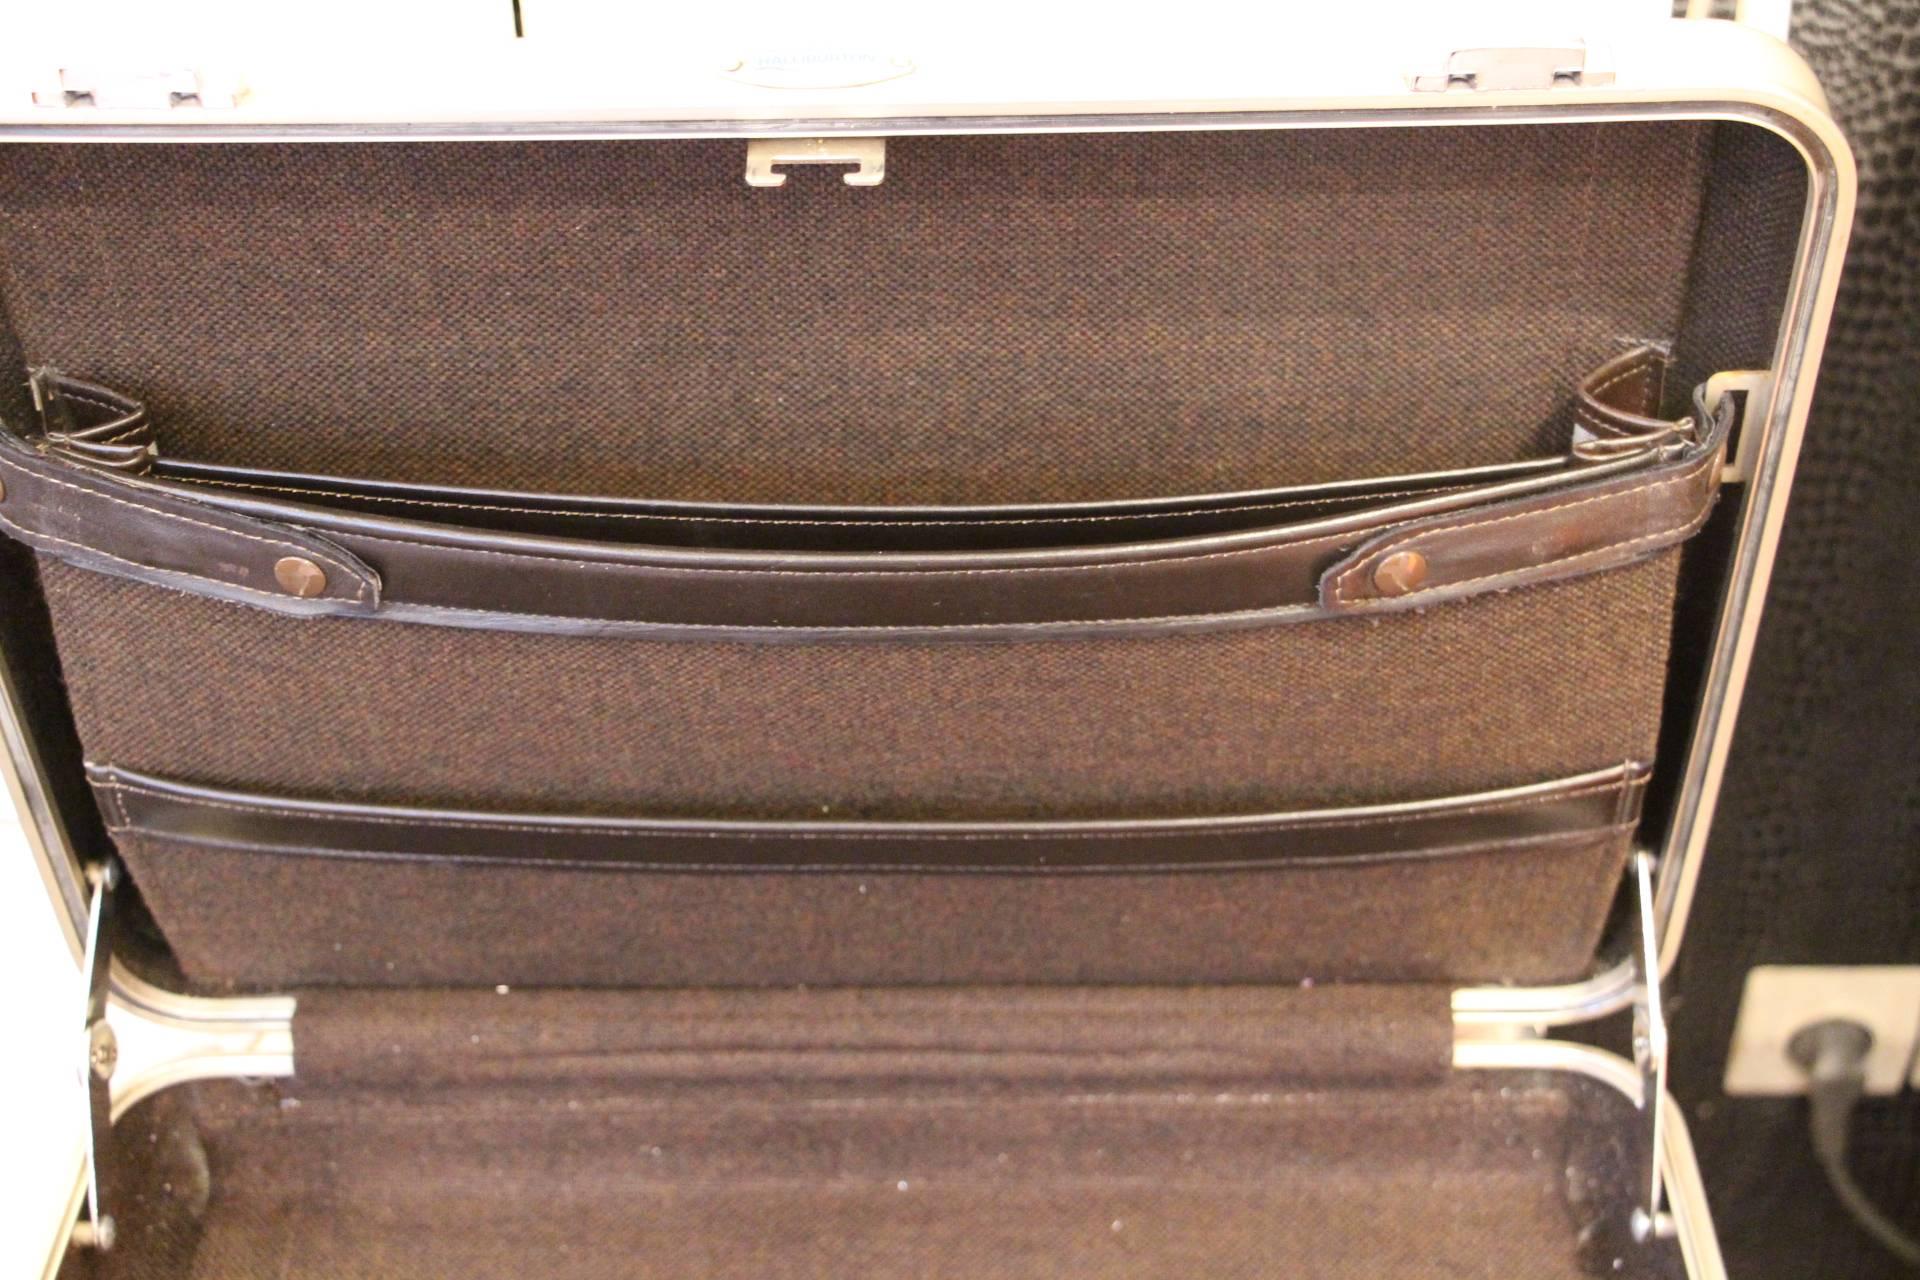 Late 20th Century 1980s Polished Aluminum Halliburton Briefcase